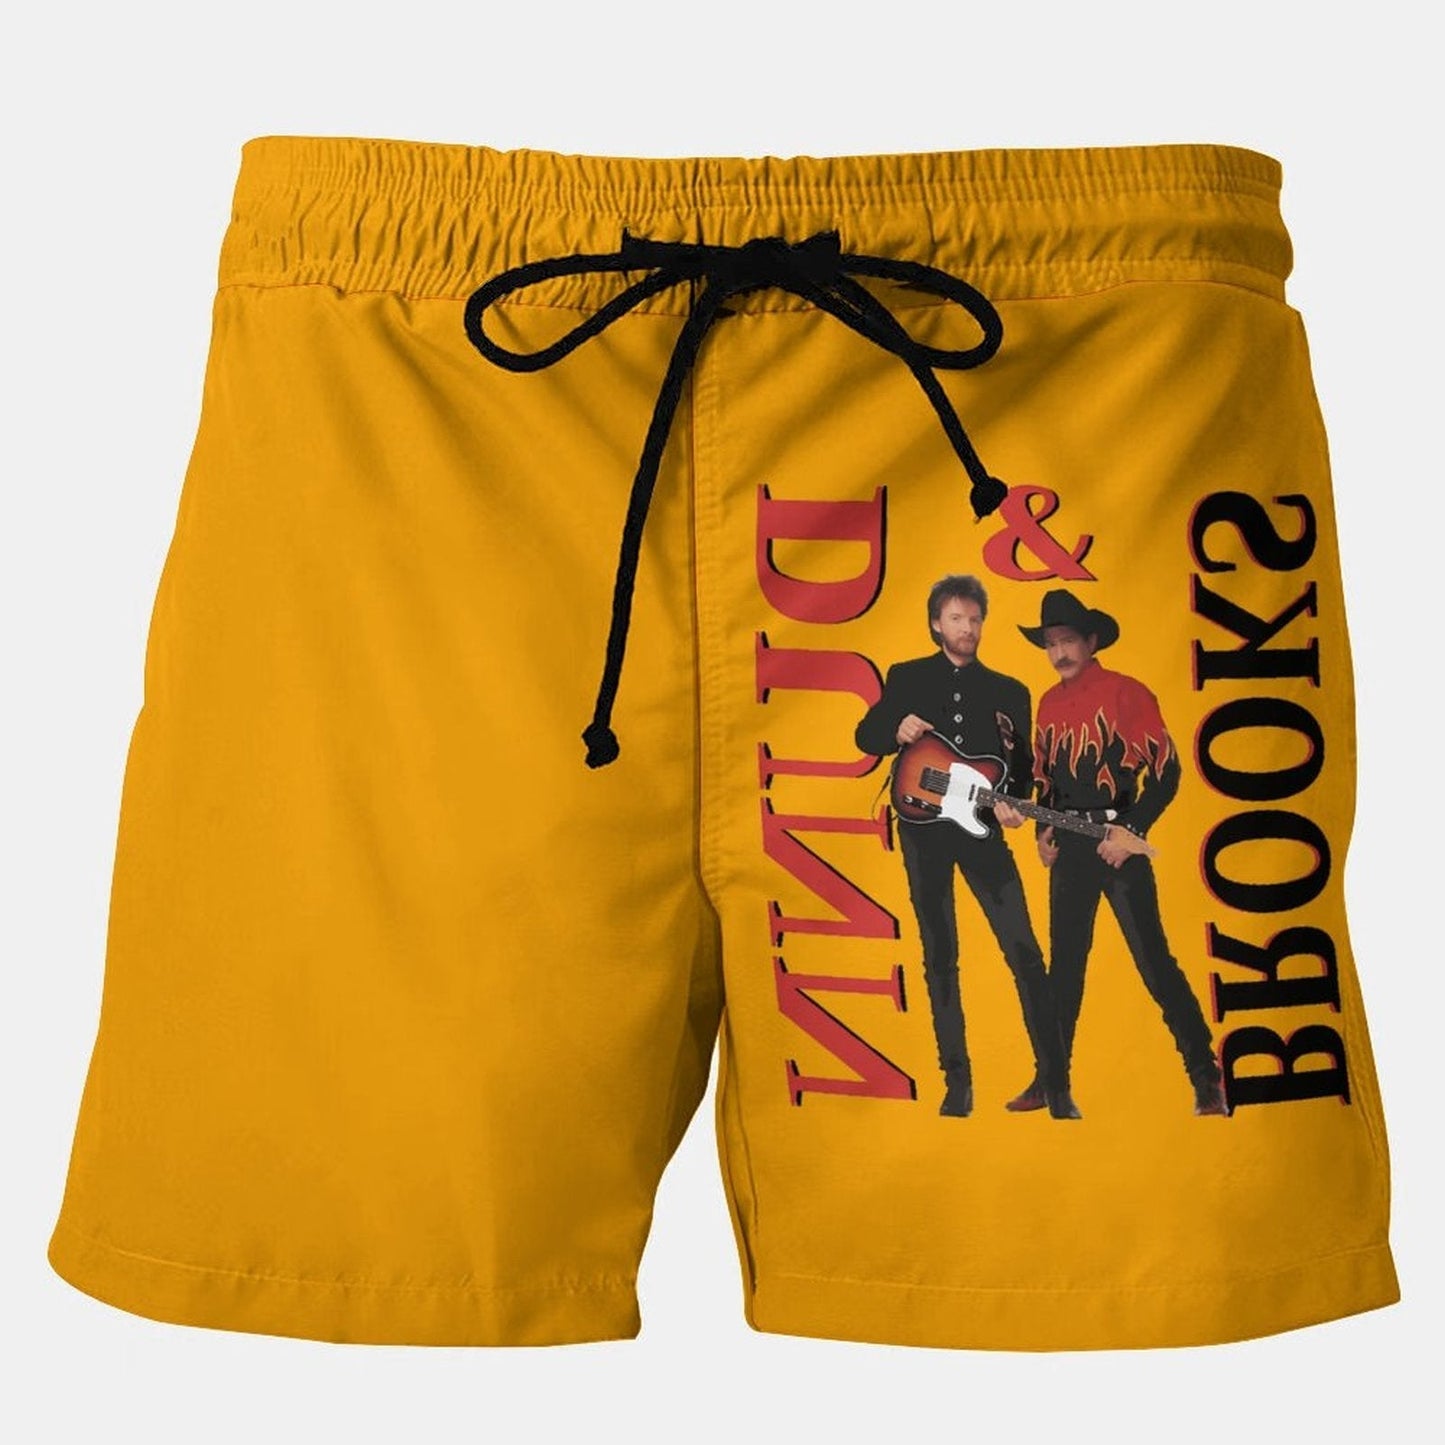 Brooks &Dunn Stretch Plus Size Shorts